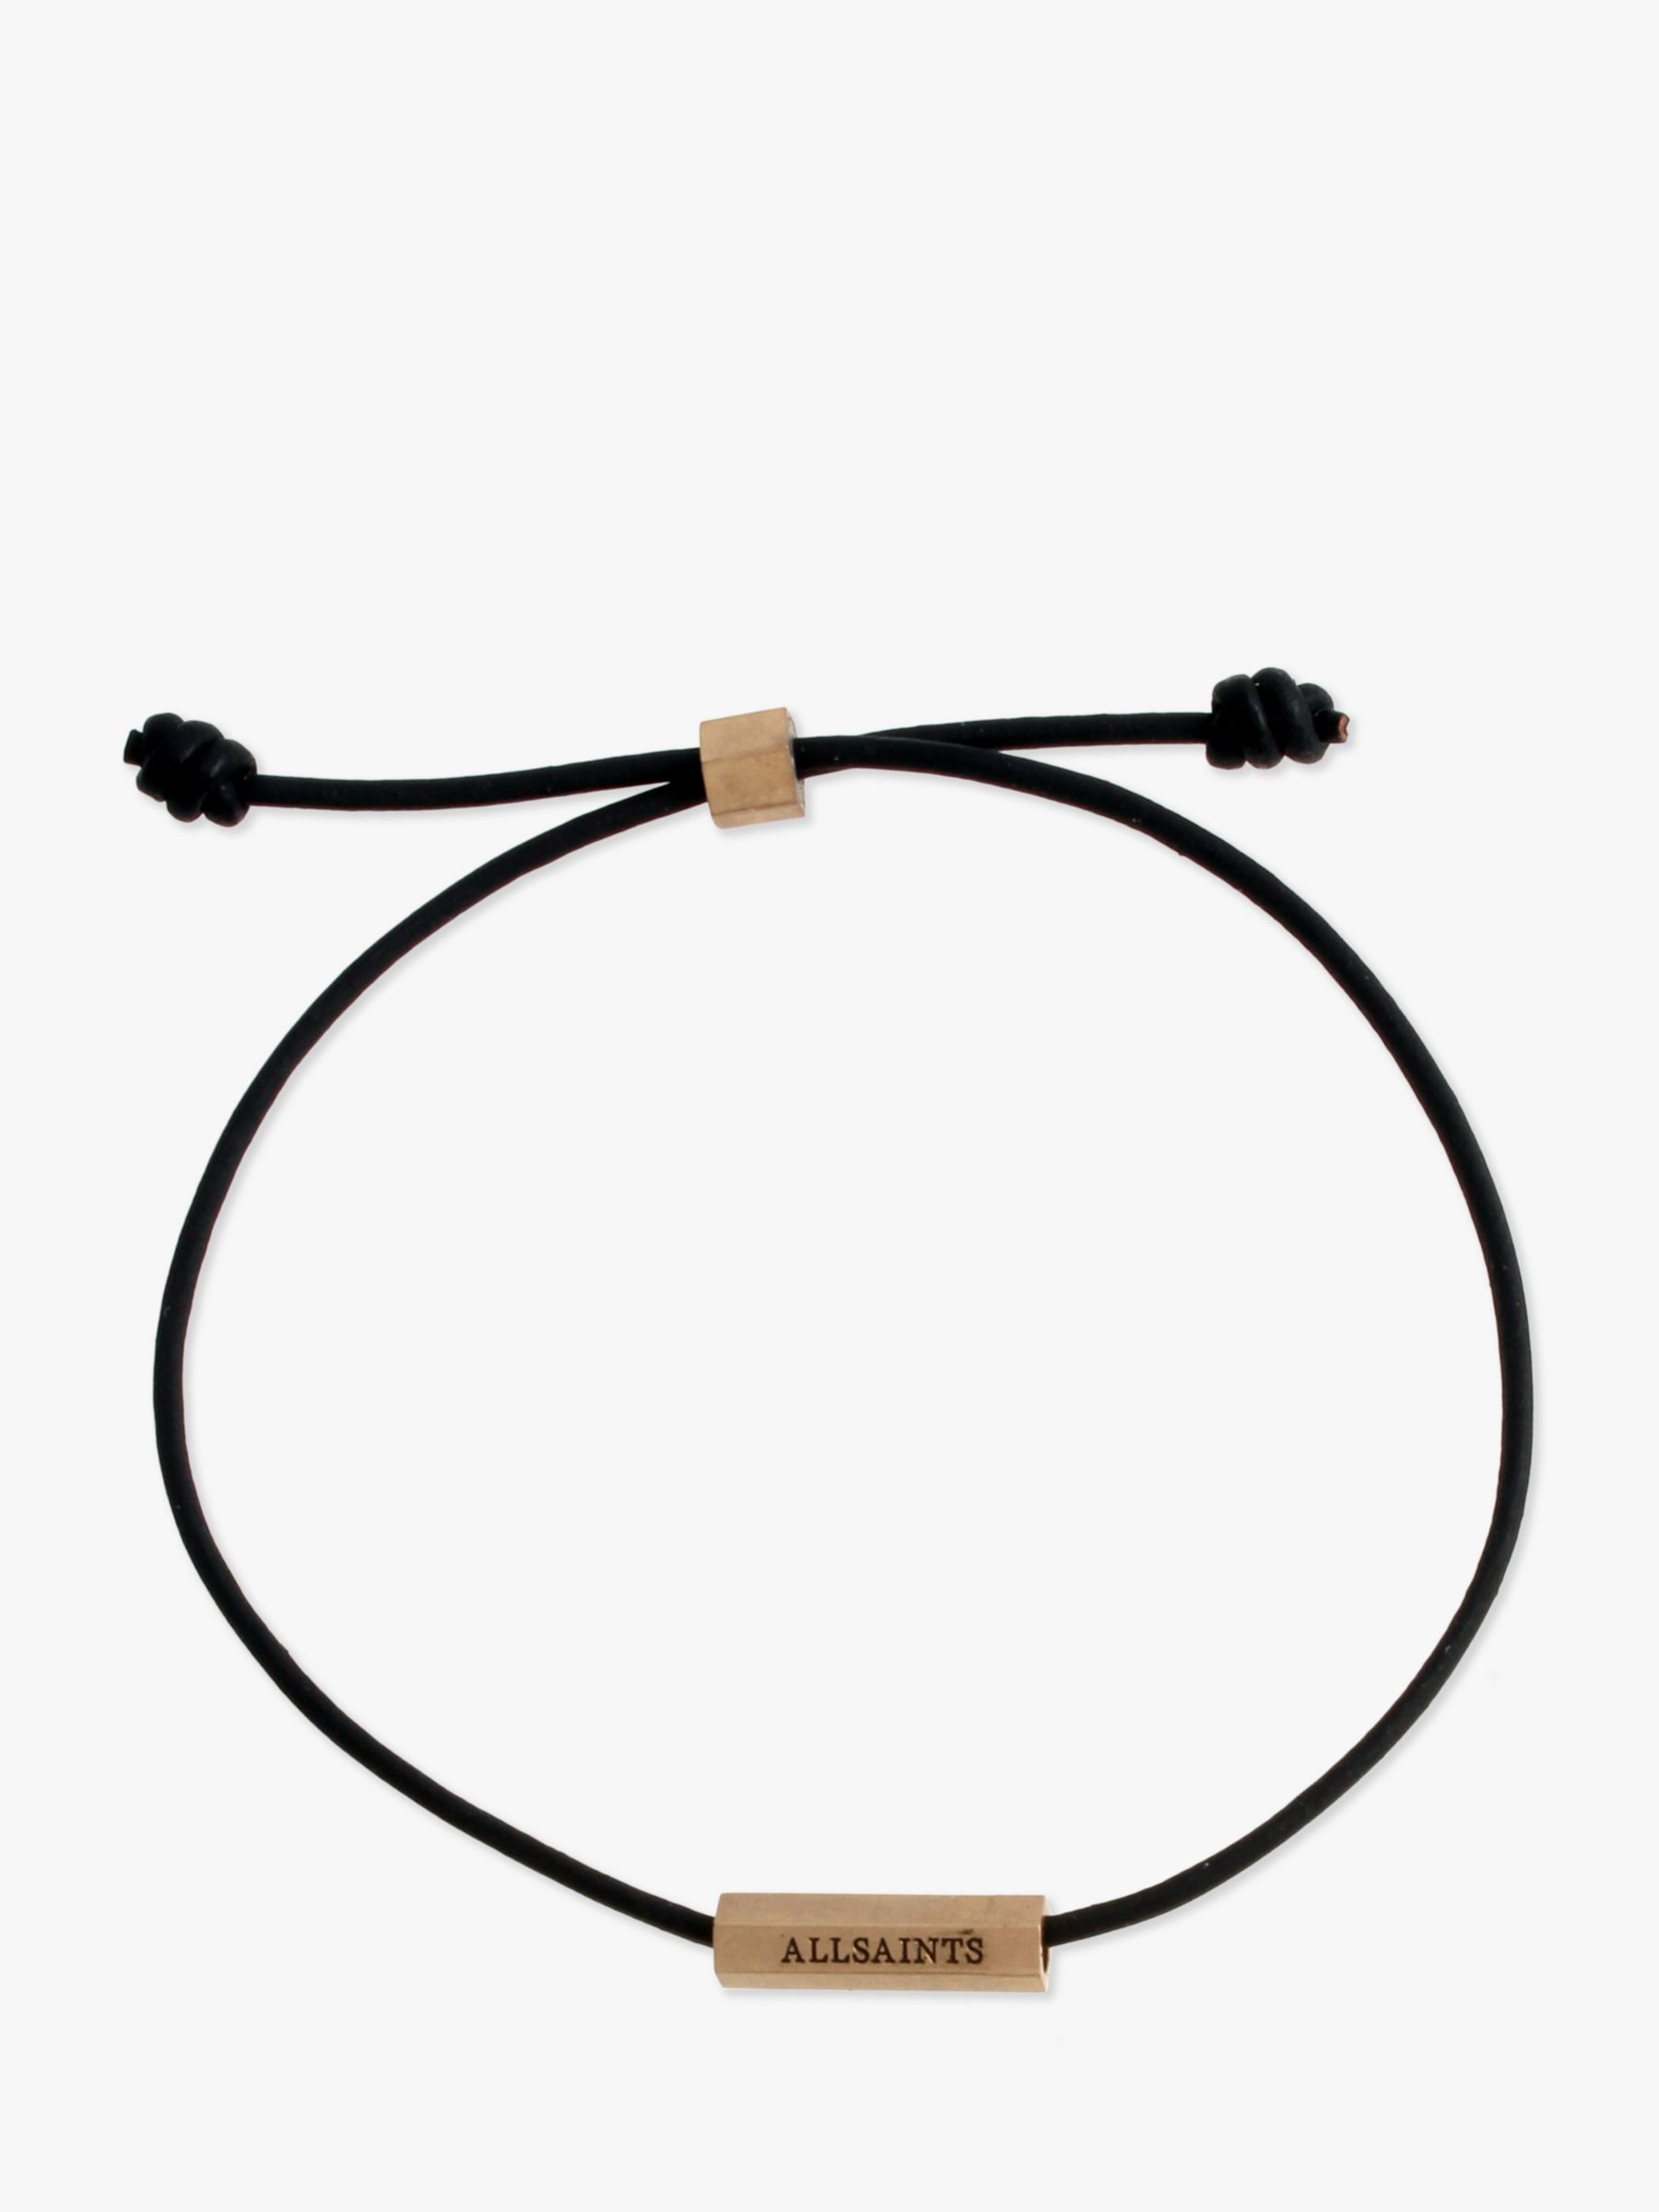 Buy AllSaints Leather Cord and Hexagon Bar Friendship Bracelet, Gold/Black Online at johnlewis.com